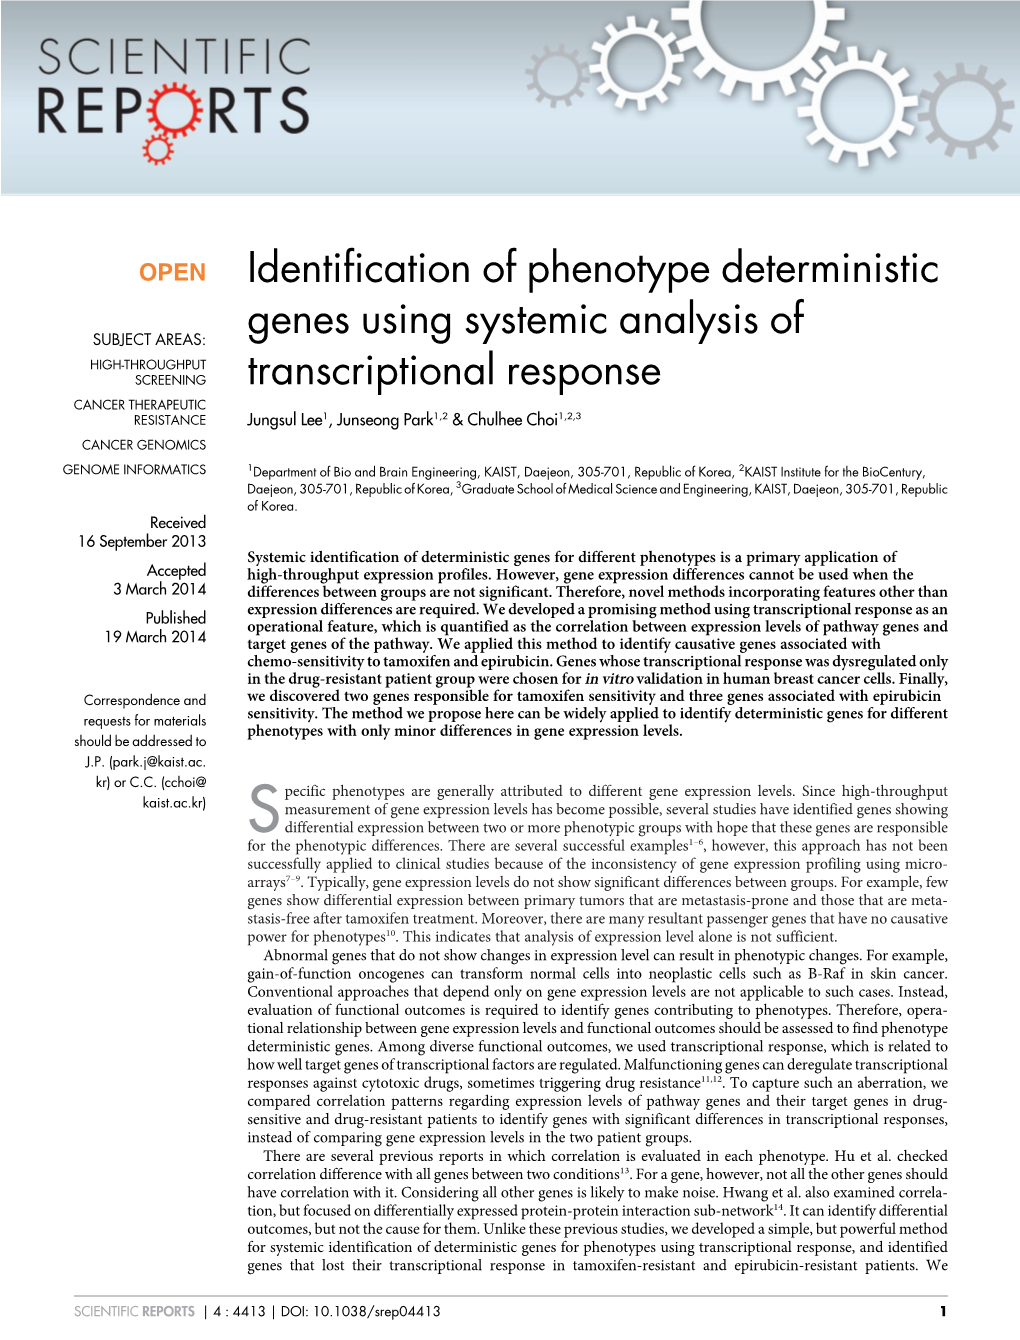 Identification of Phenotype Deterministic Genes Using Systemic